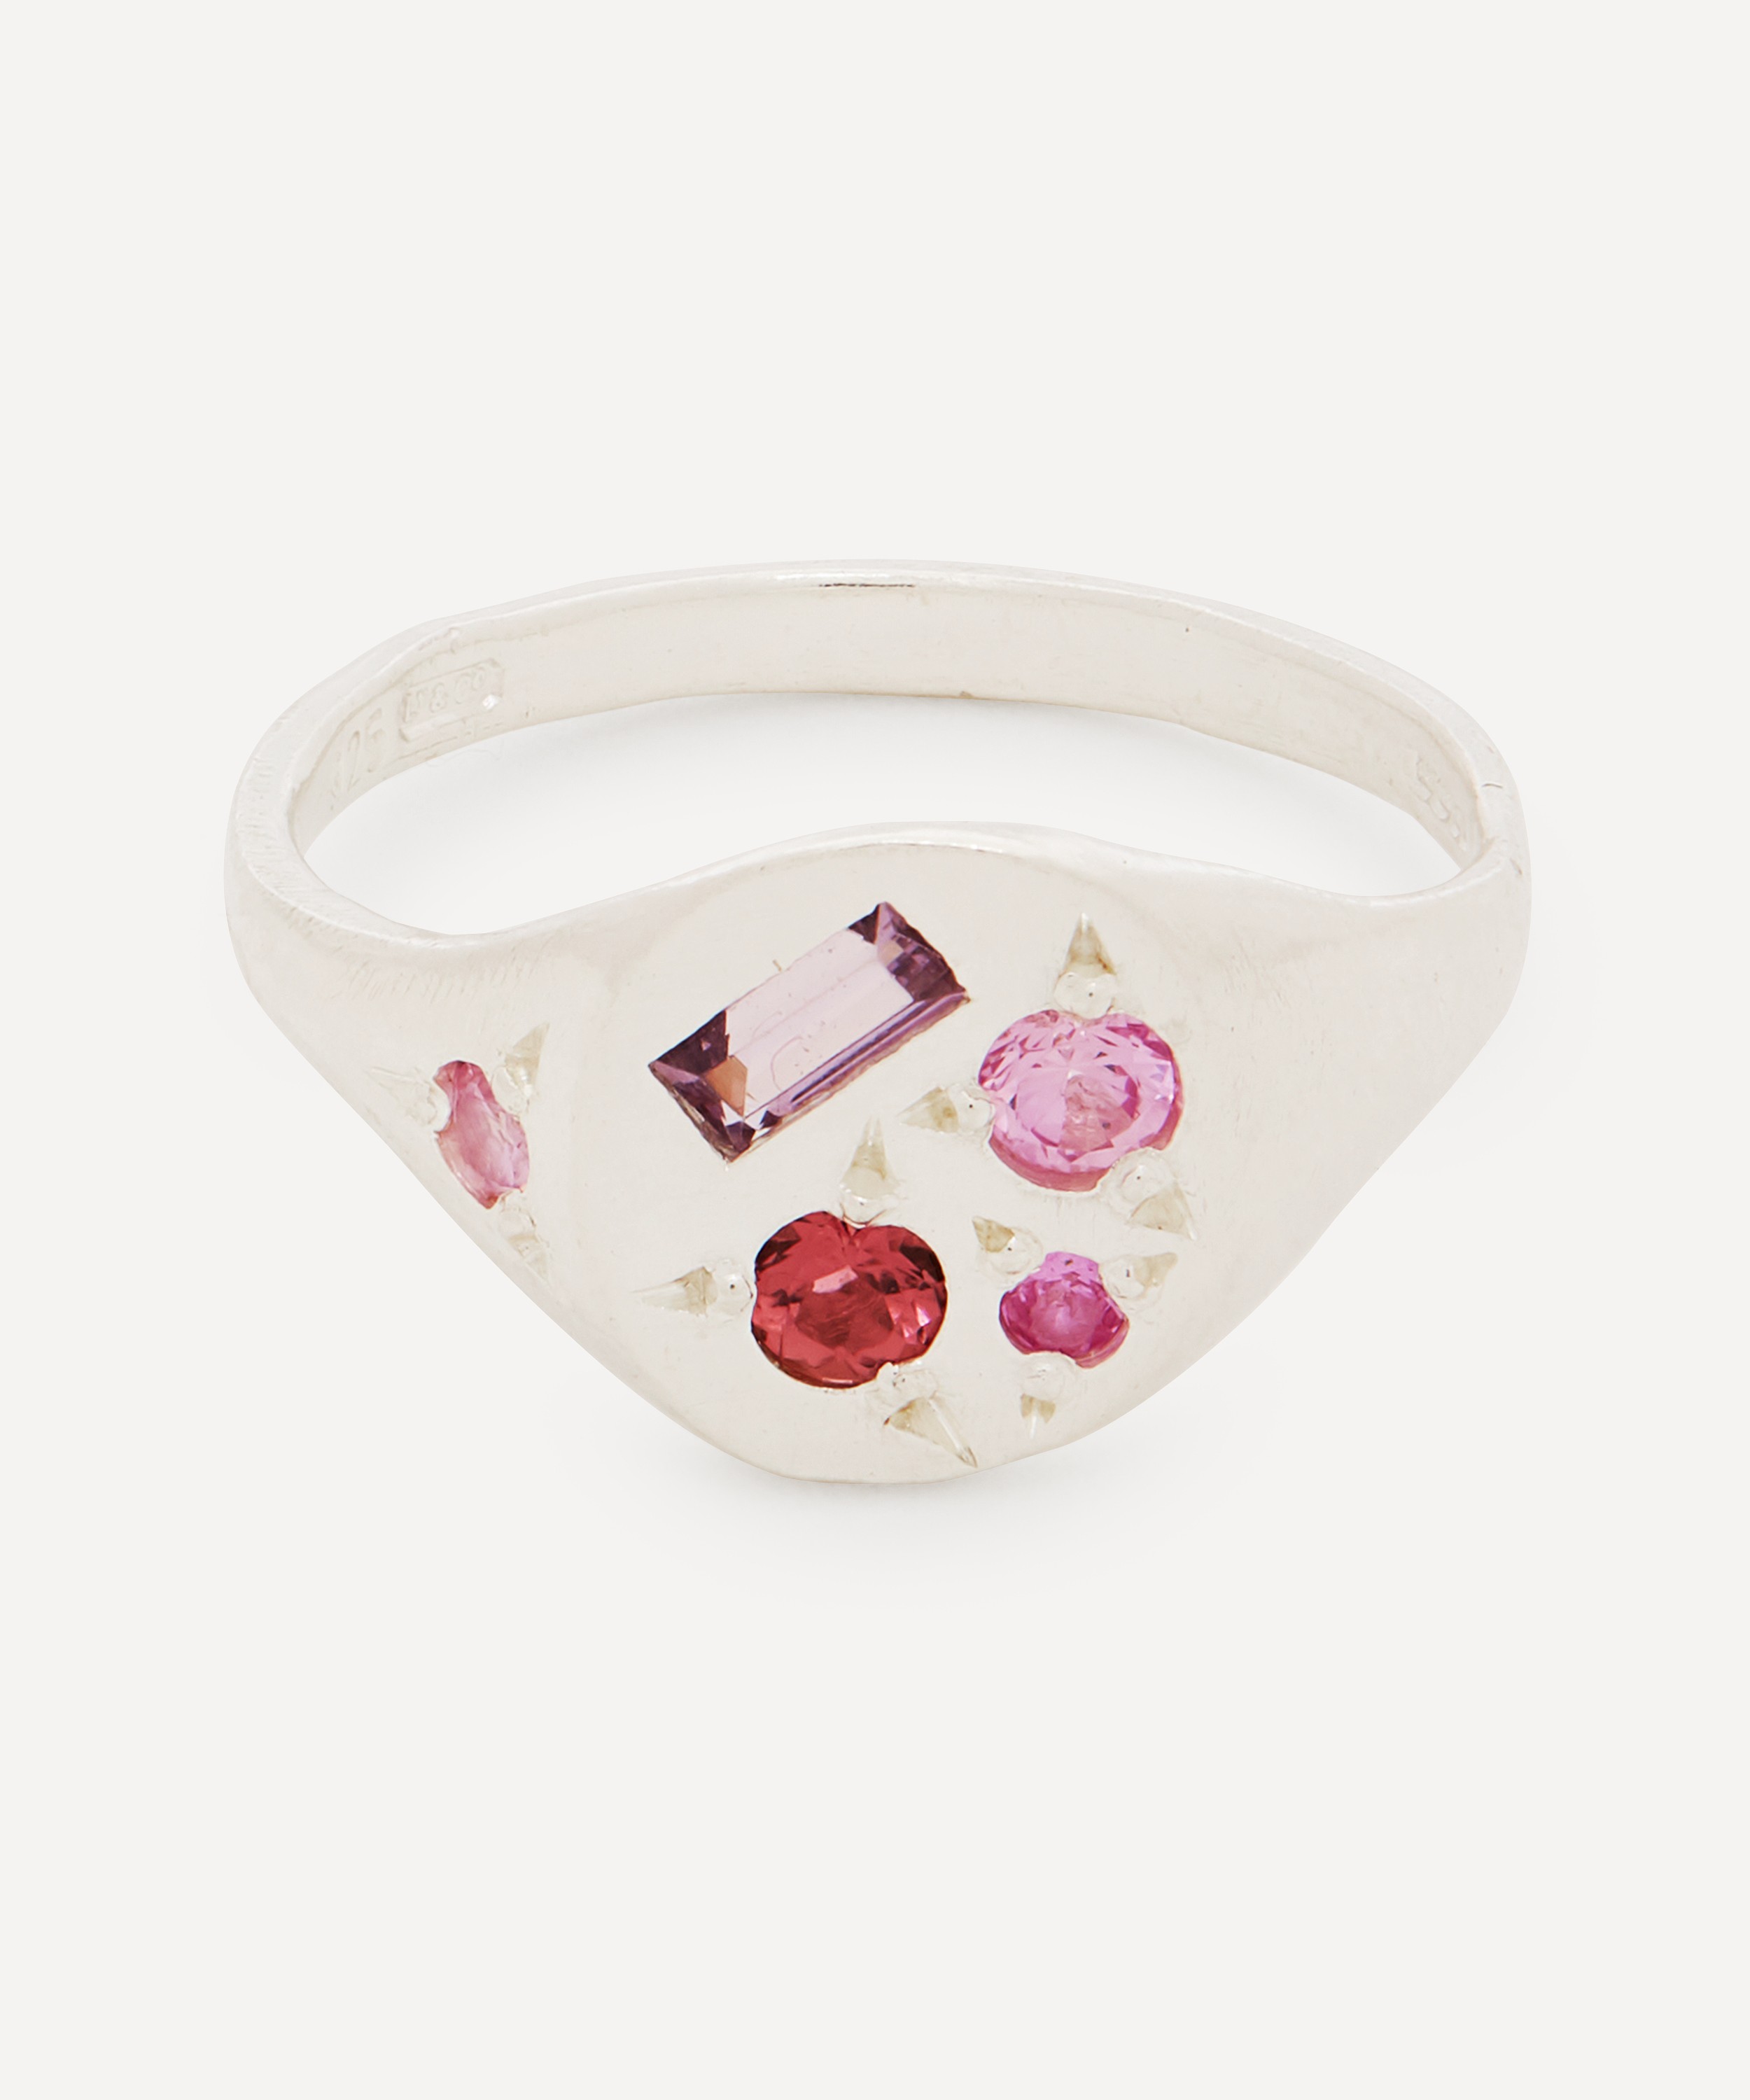 Seb Brown - Silver Neapolitan Pink Sapphire and Tourmaline Signet Ring